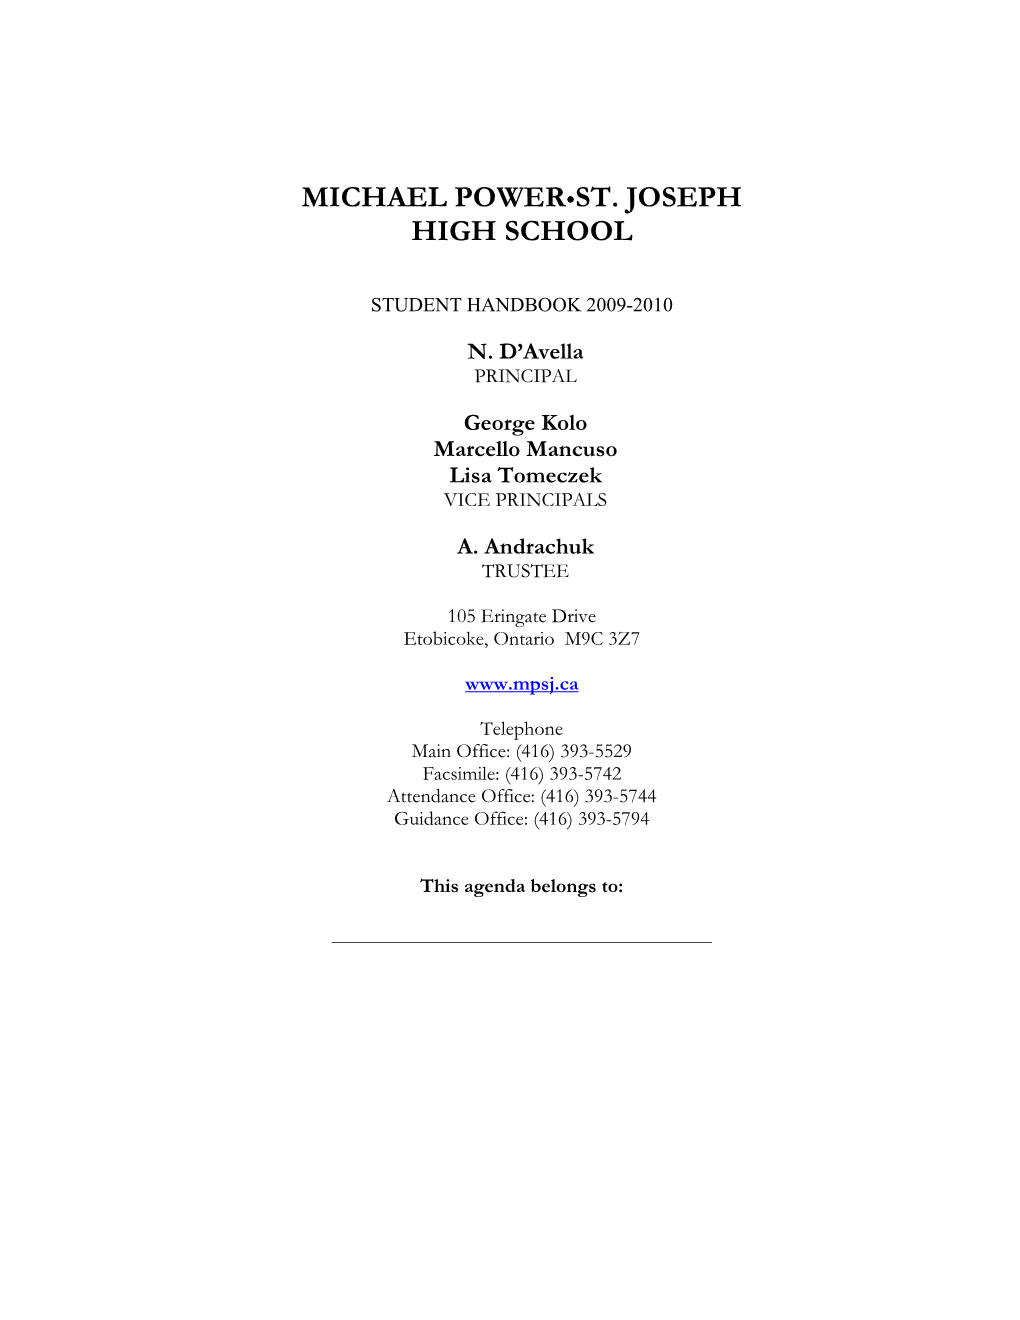 Michael Power•St. Joseph High School